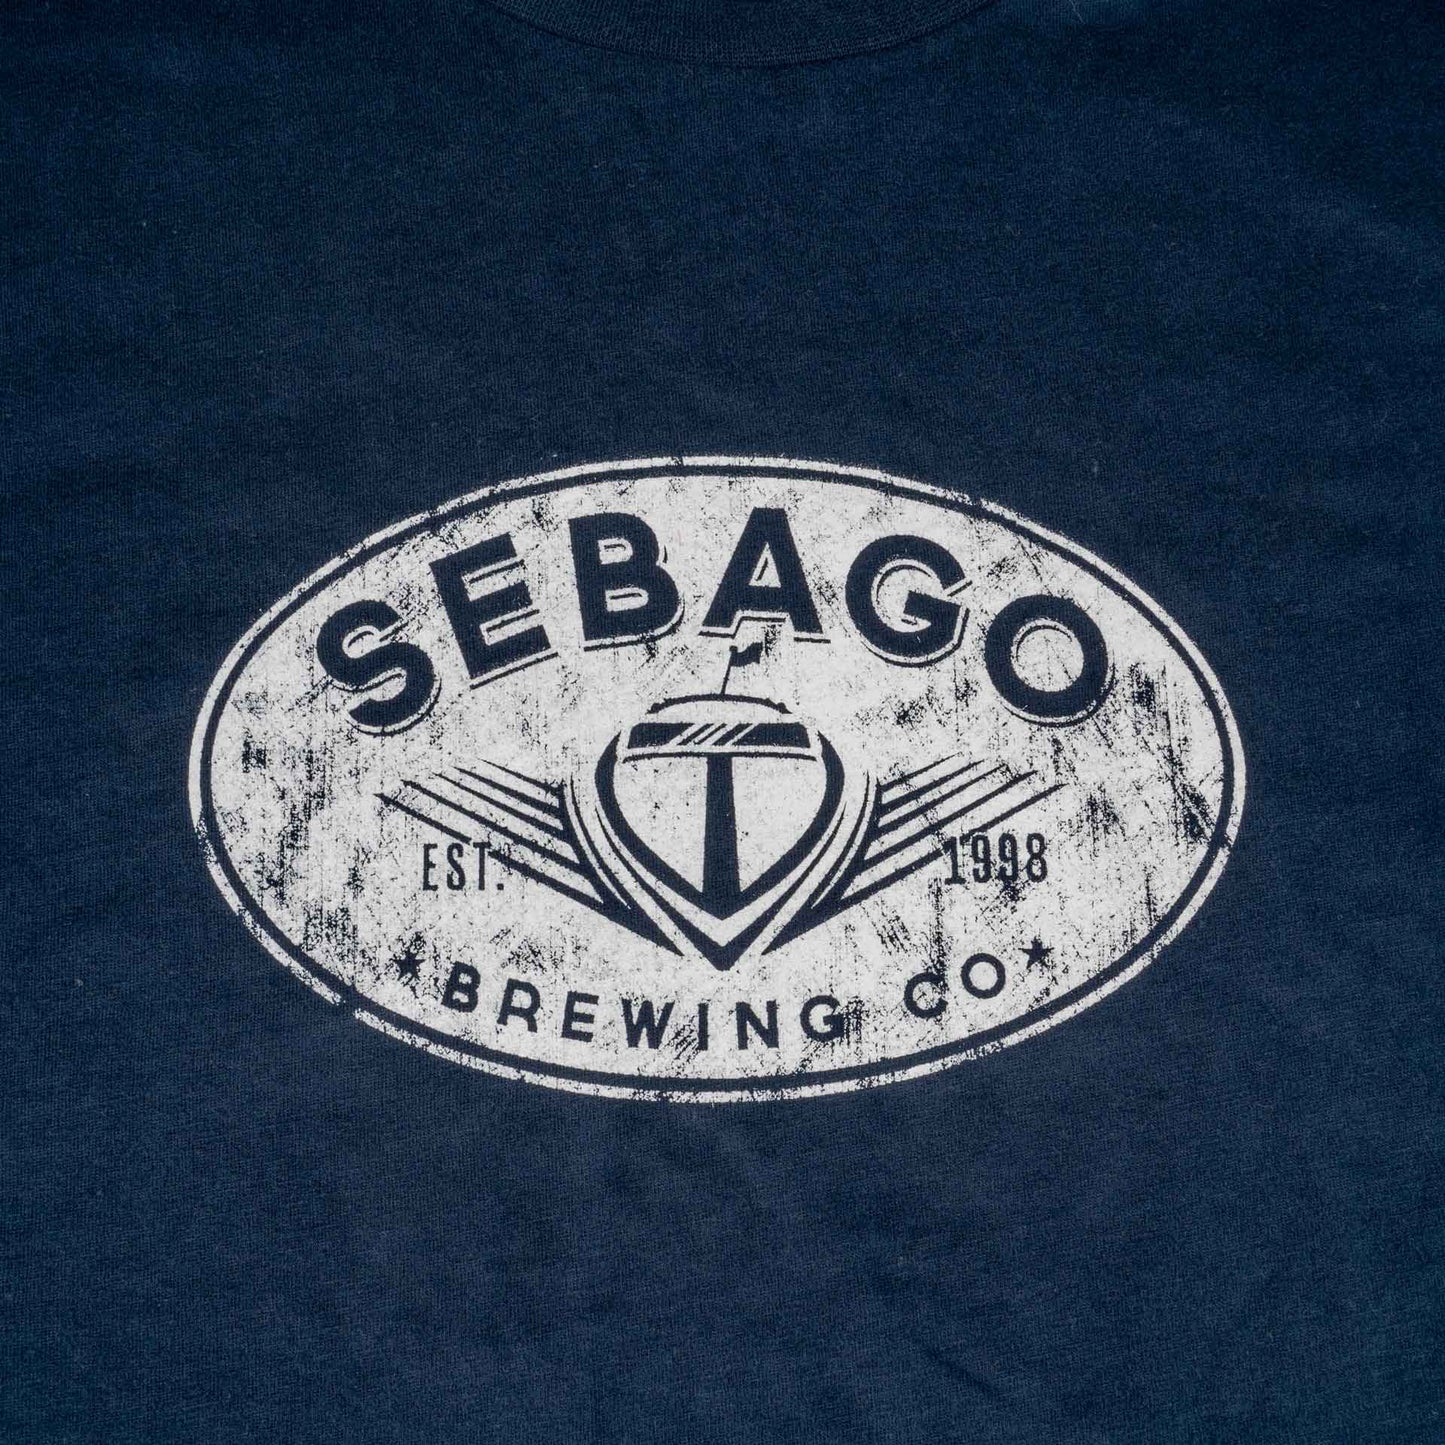 Sebago Distressed Logo Tee - Navy